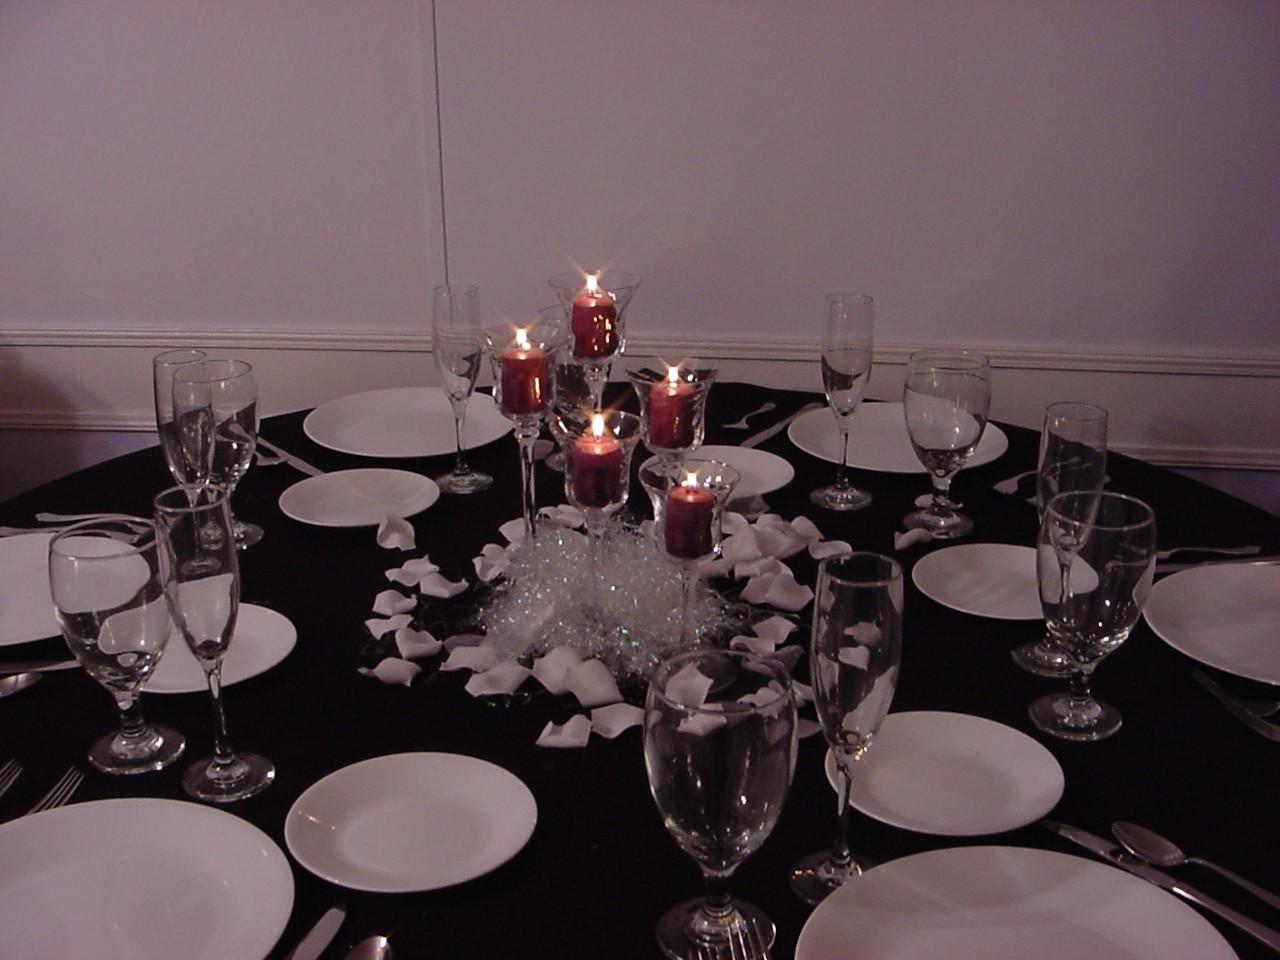 Wedding reception table candle centerpiece idea photo: a small elegant